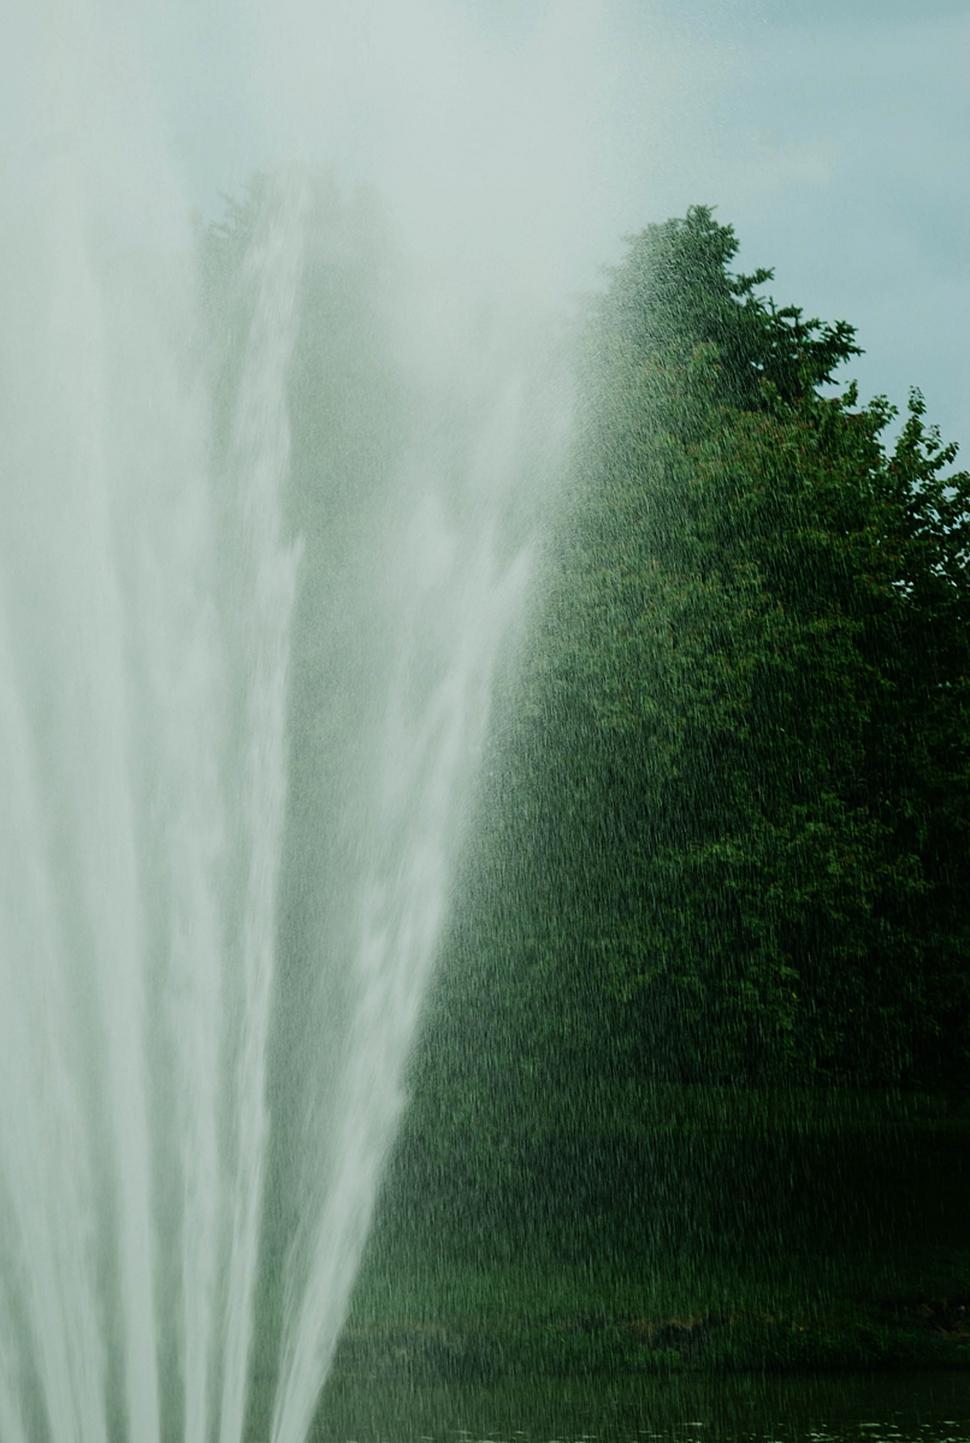 Free Image of Fountain spray 